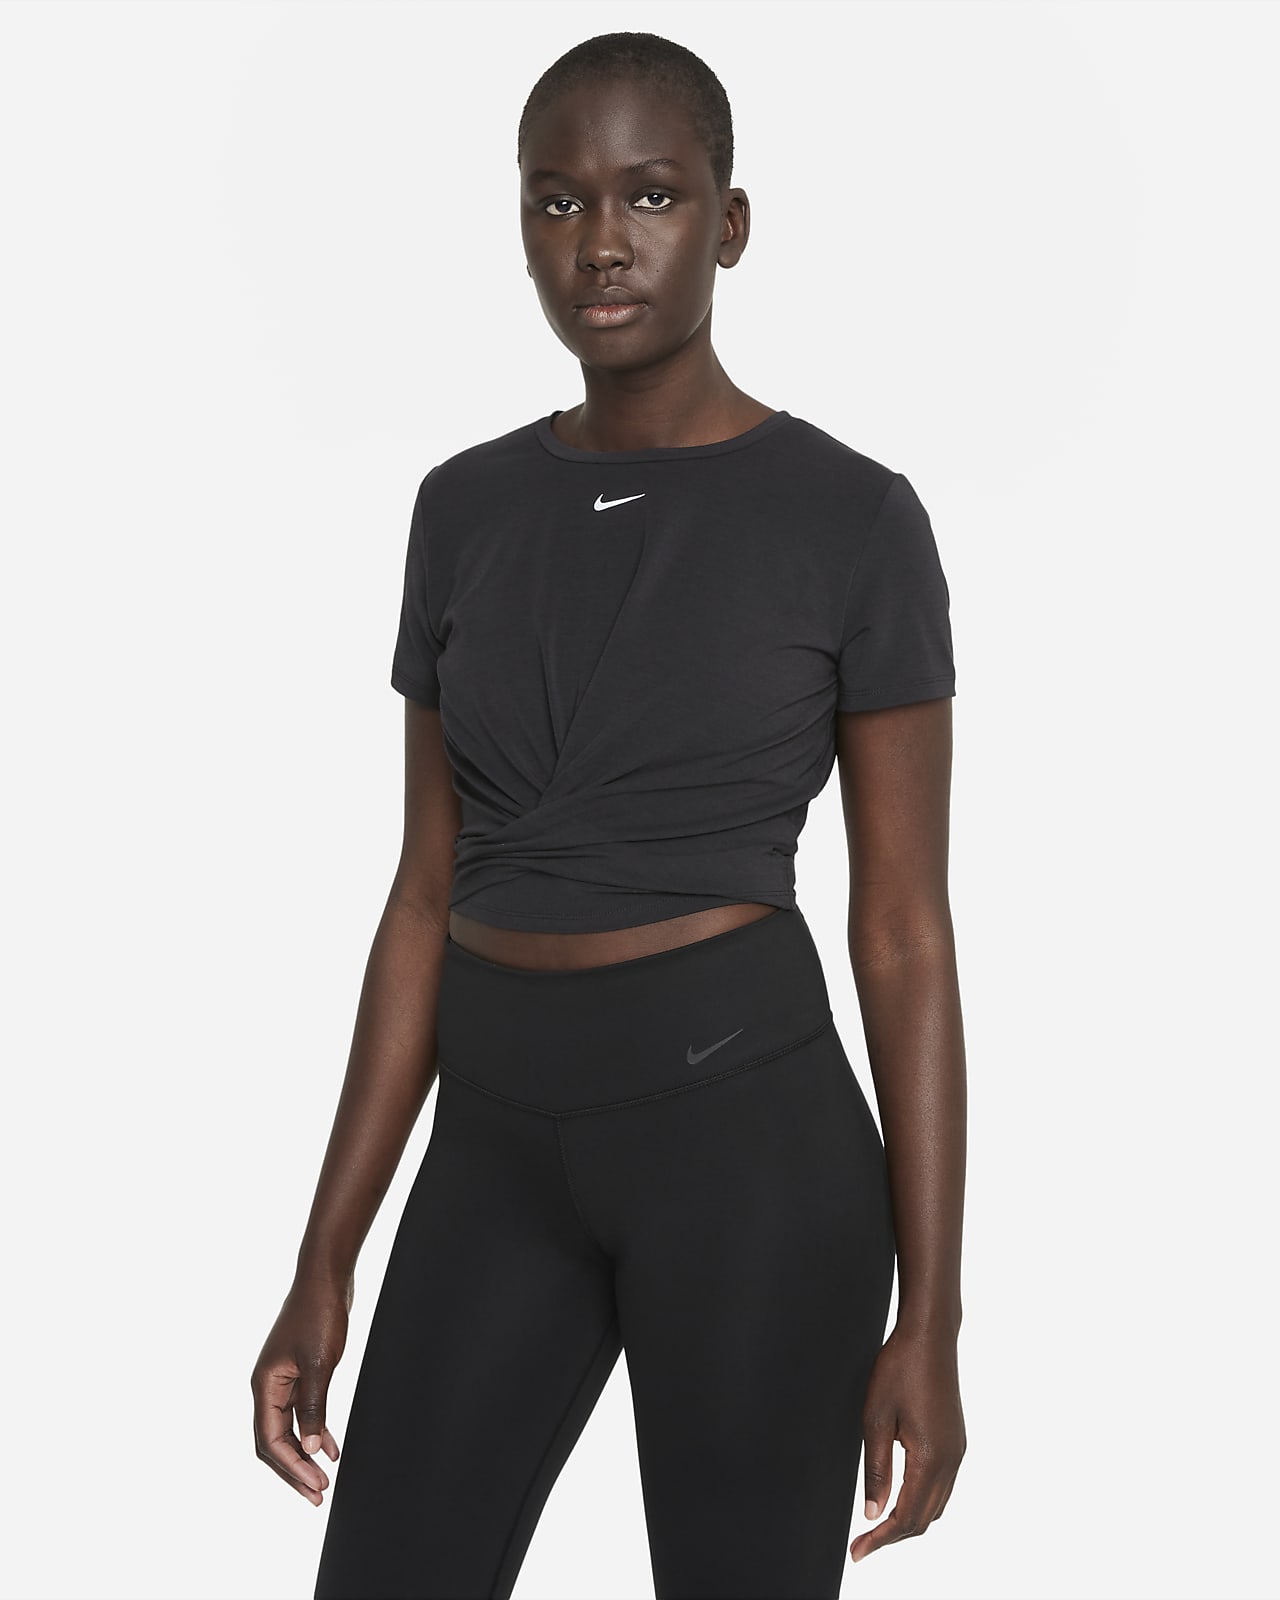 Nike Dri-FIT Women's Short-Sleeve Top. Nike LU